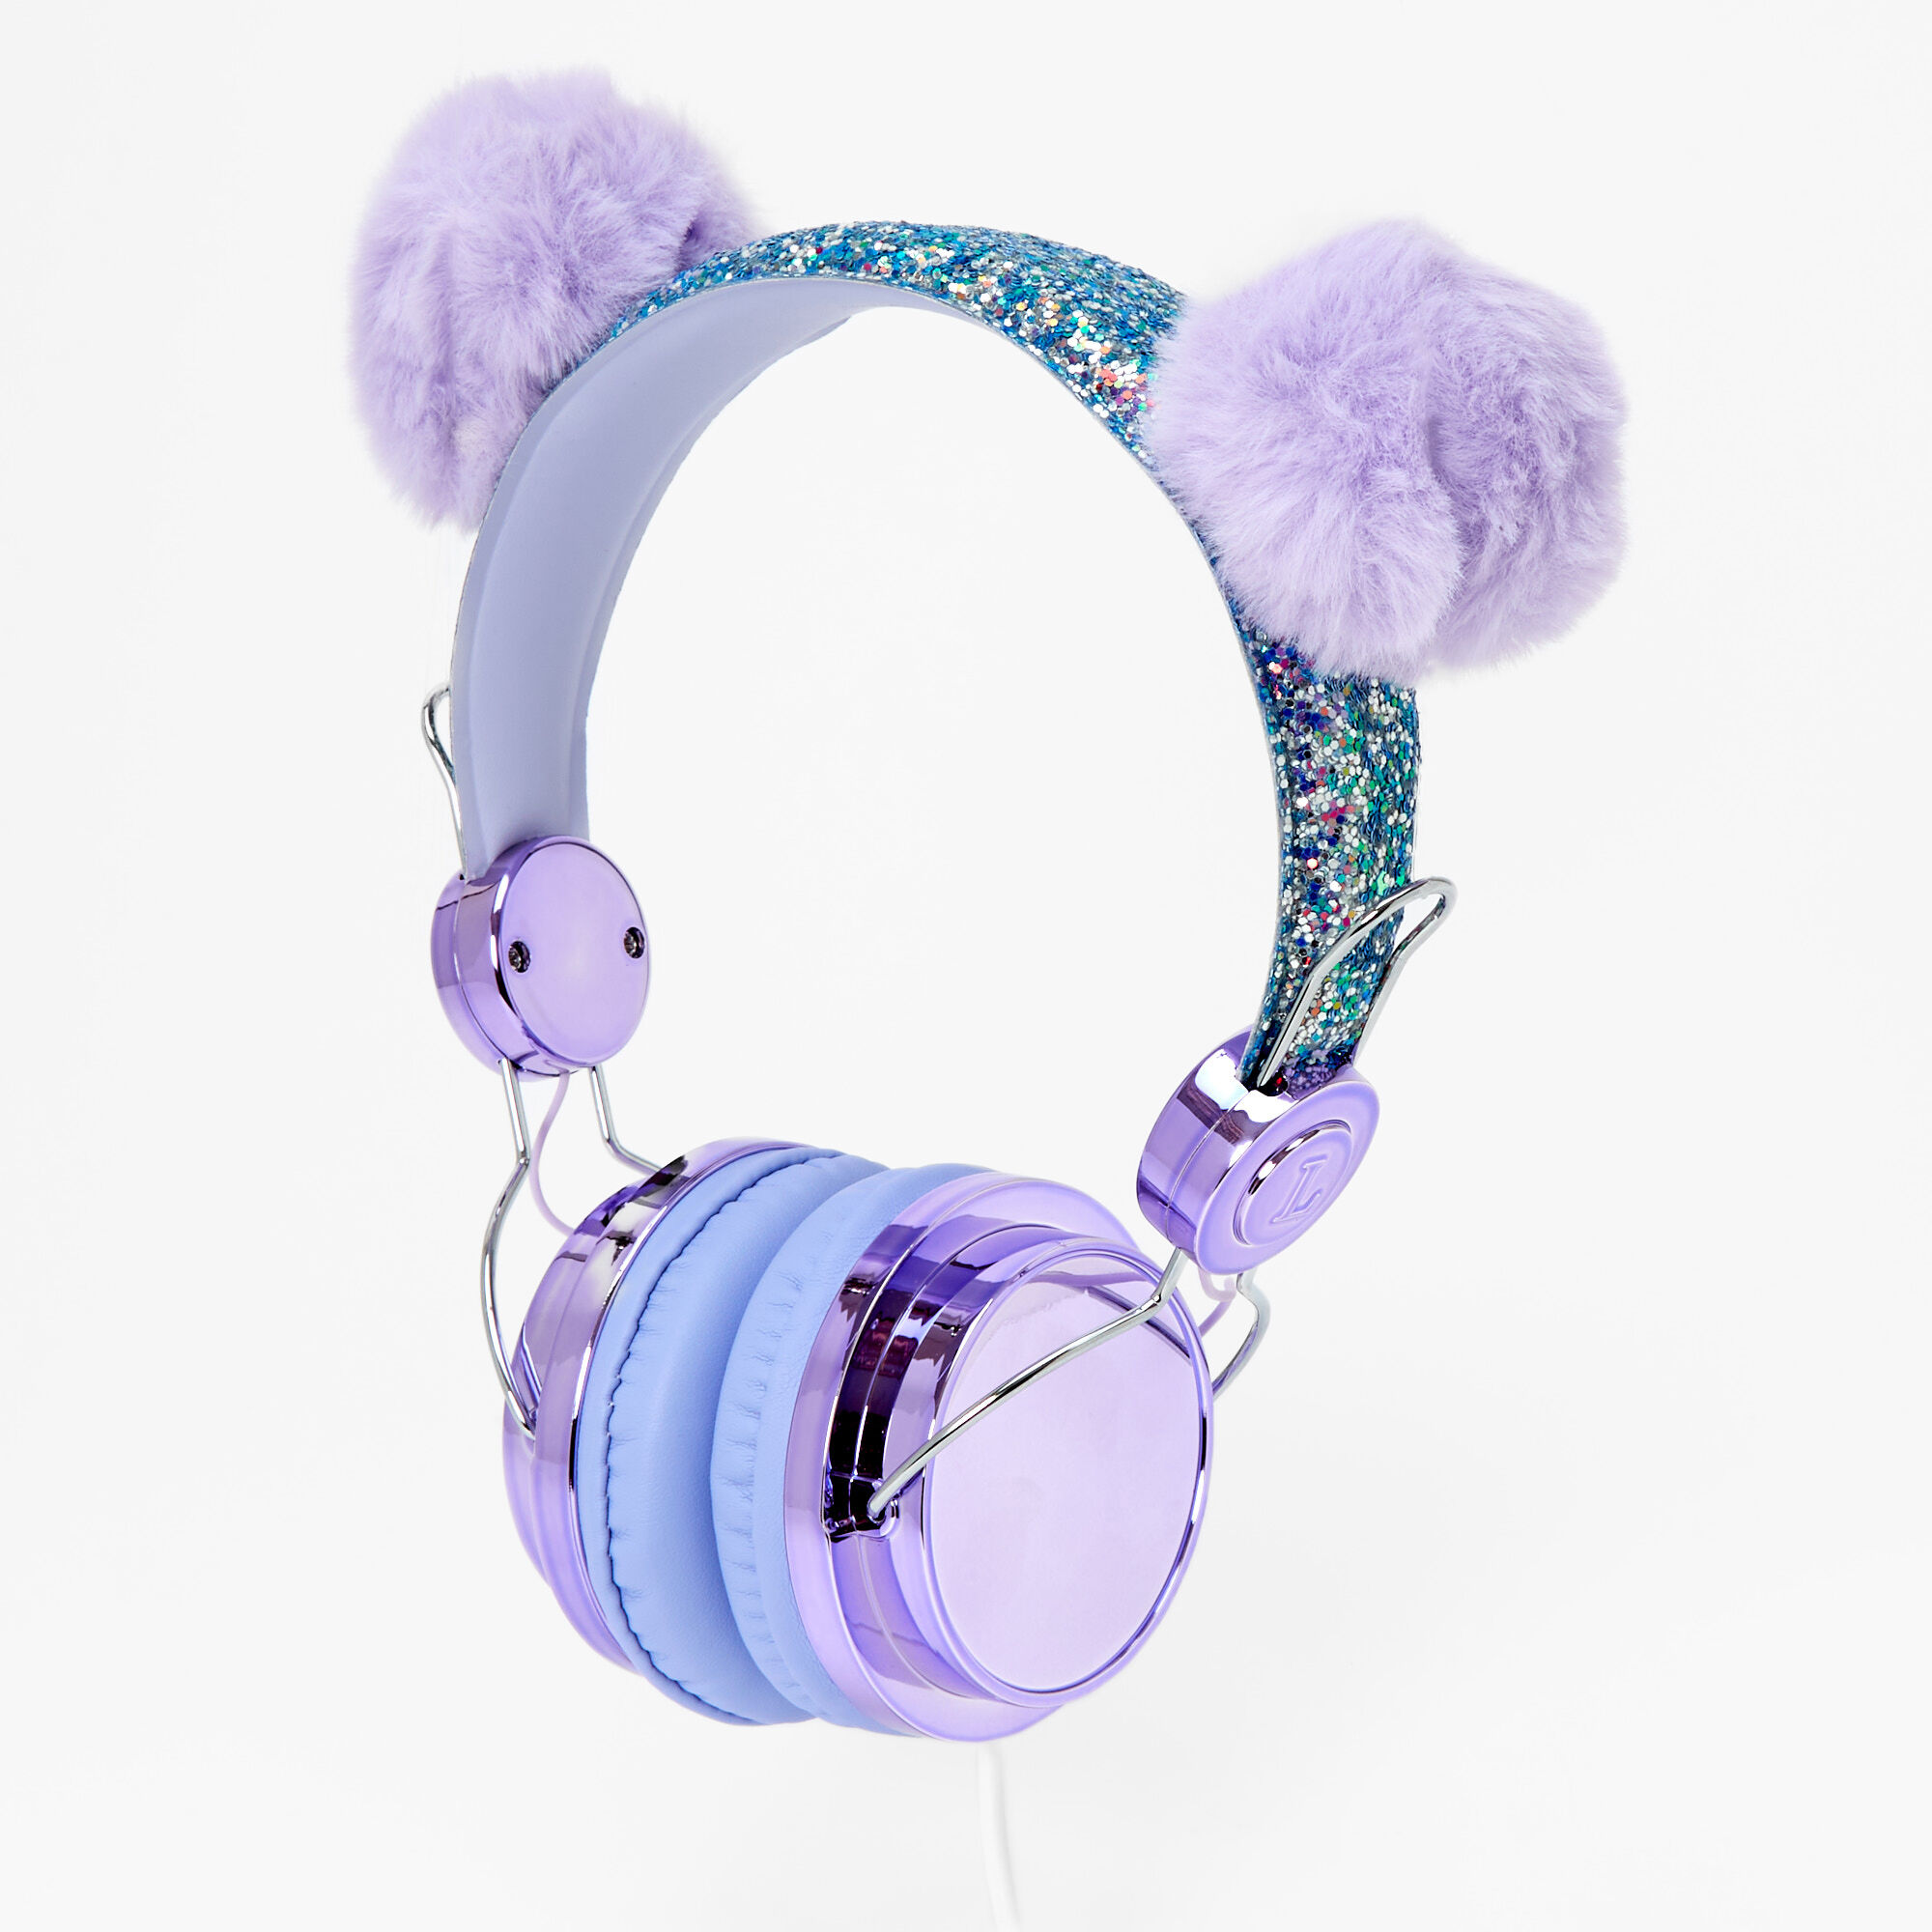 View Claires Lavender Pom Glitter Headphones information